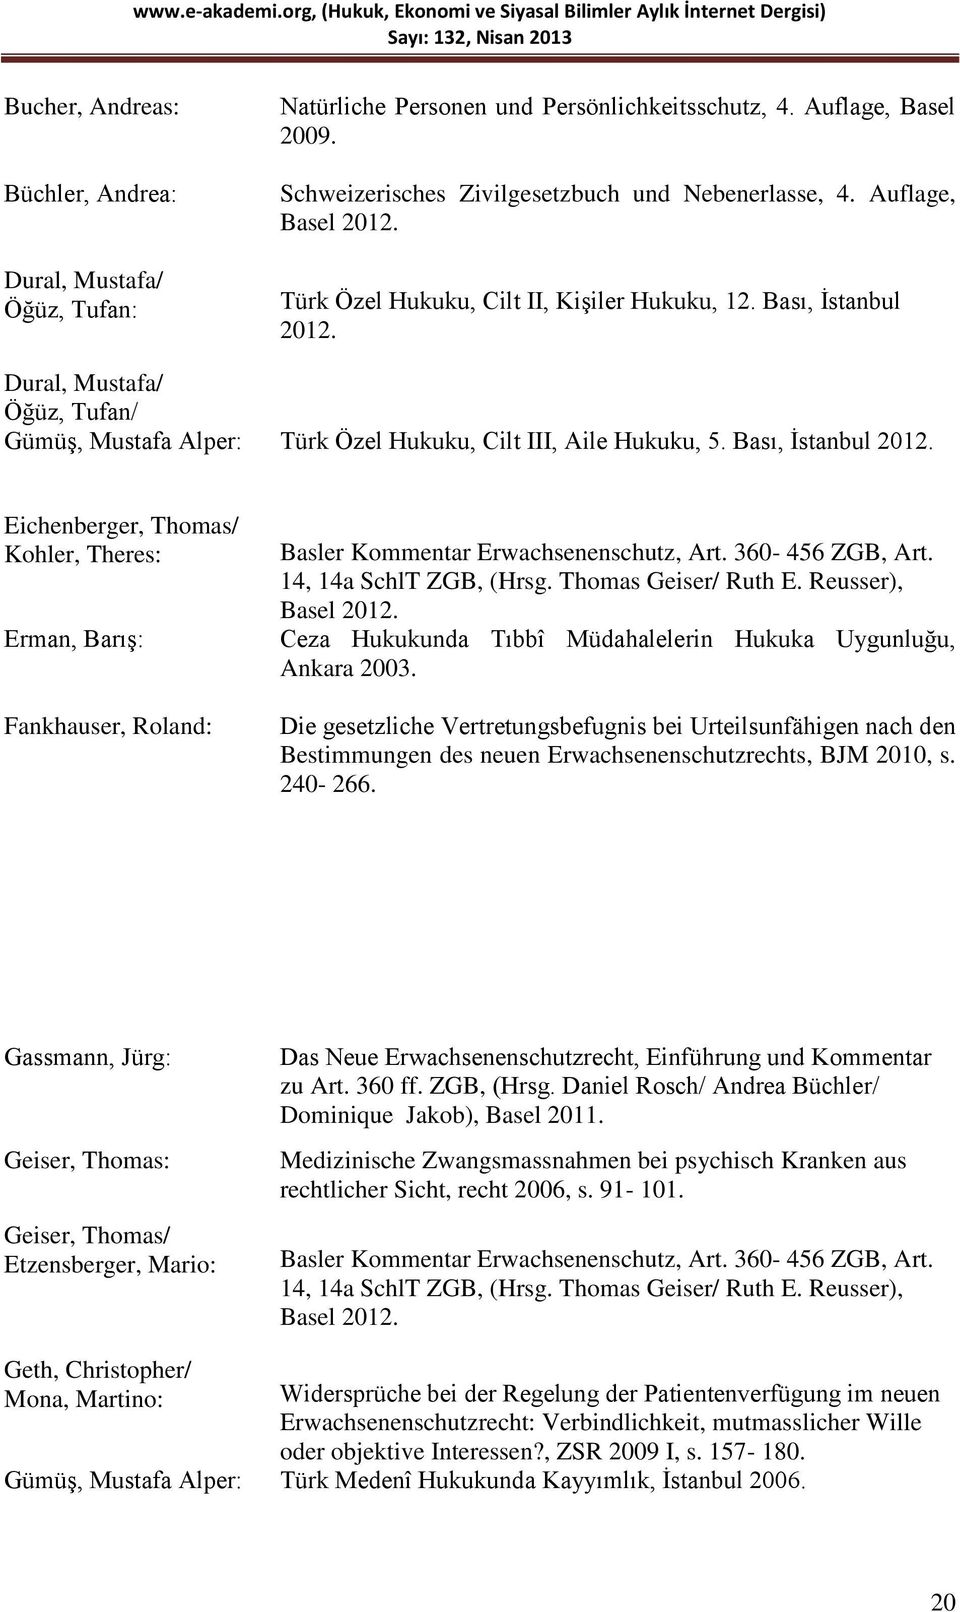 Bası, Ġstanbul 2012. Eichenberger, Thomas/ Kohler, Theres: Erman, BarıĢ: Fankhauser, Roland: Basler Kommentar Erwachsenenschutz, Art. 360-456 ZGB, Art. 14, 14a SchlT ZGB, (Hrsg. Thomas Geiser/ Ruth E.